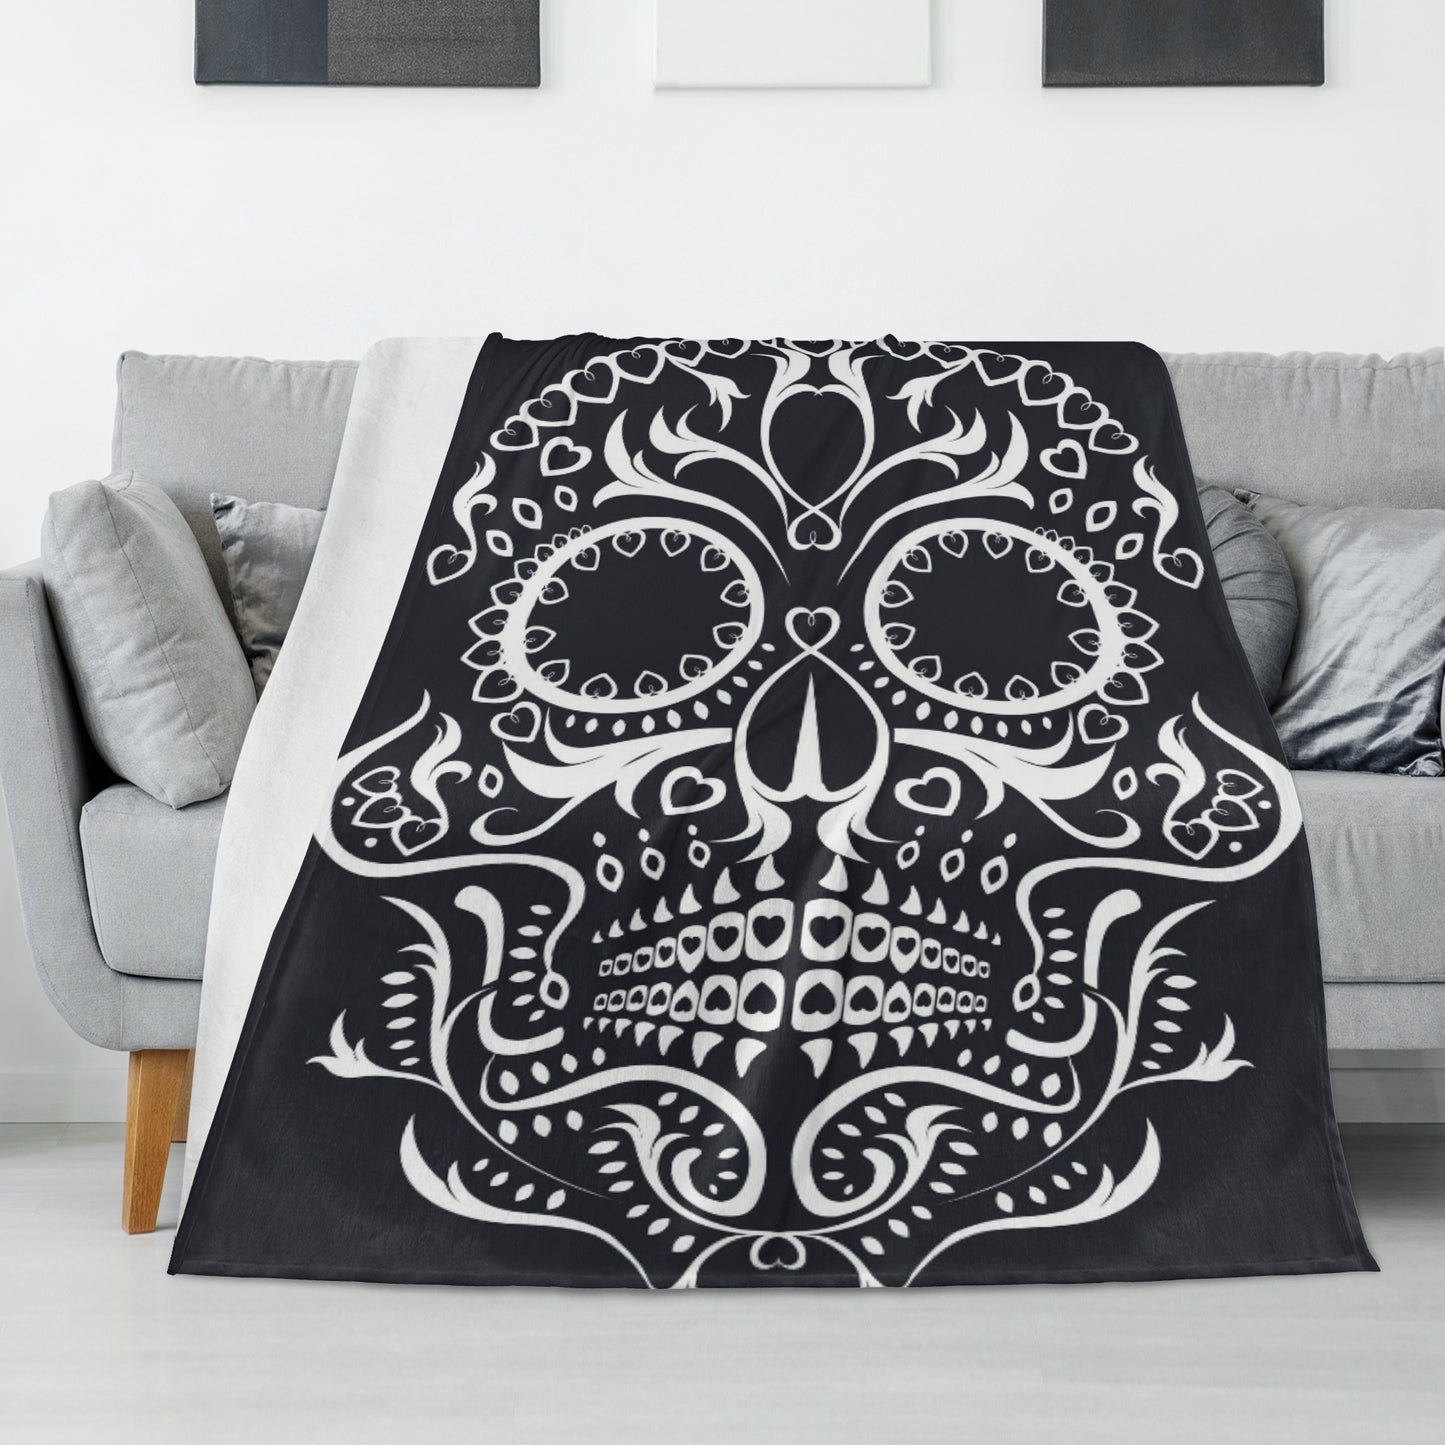 Sugar skull pattern Long Vertical Flannel Breathable Blanket 4 Sizes